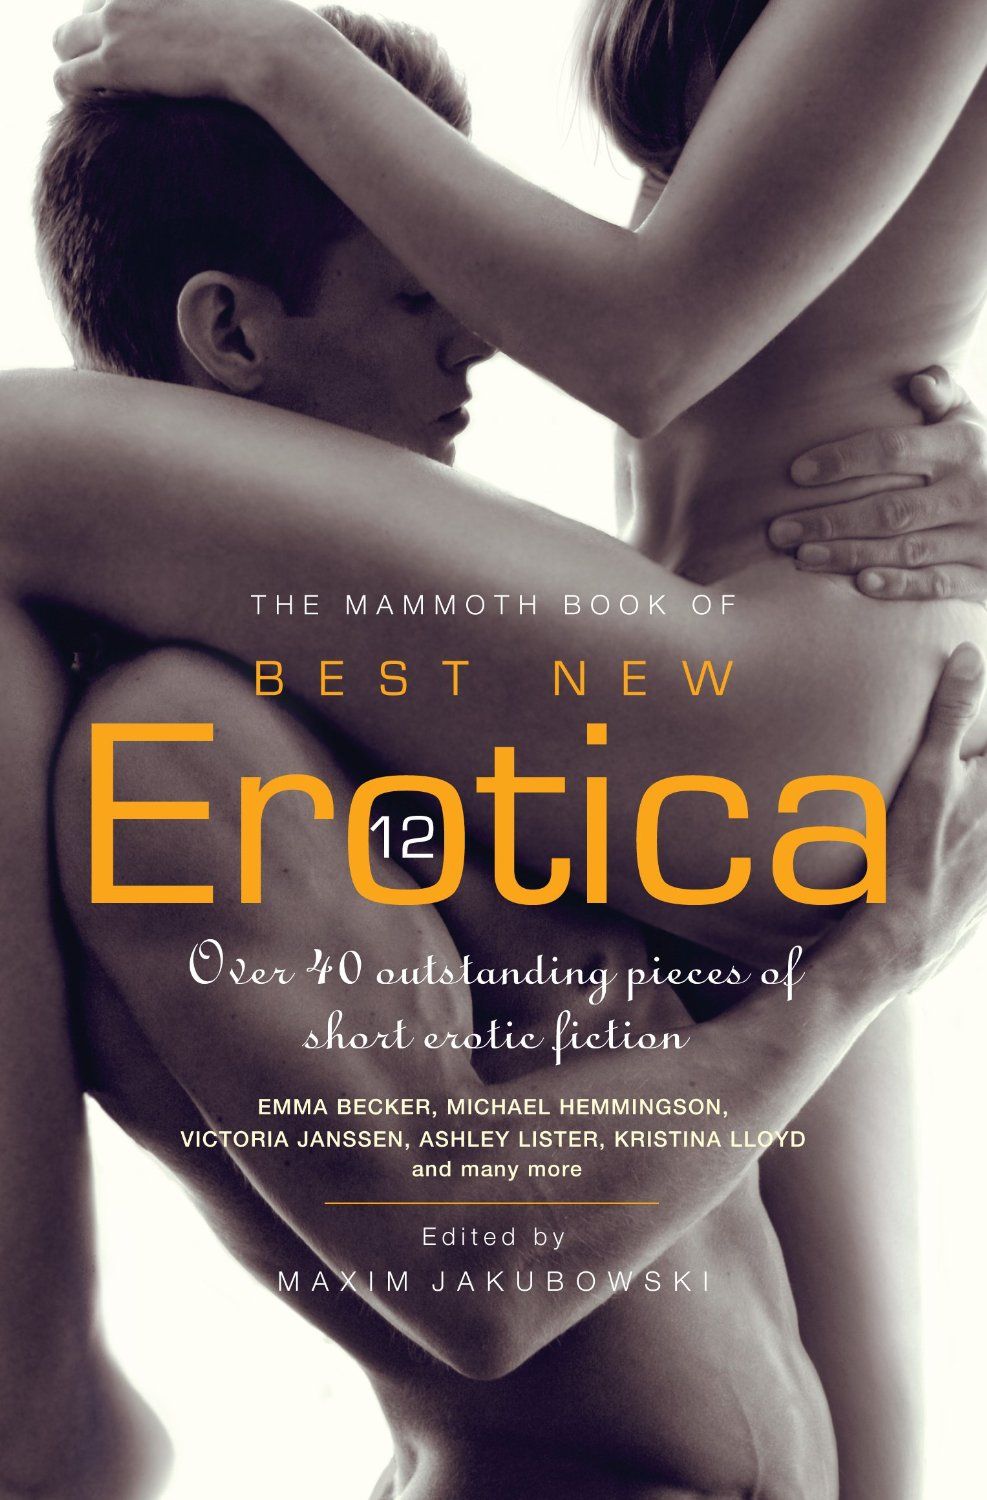 Erotic short story contest